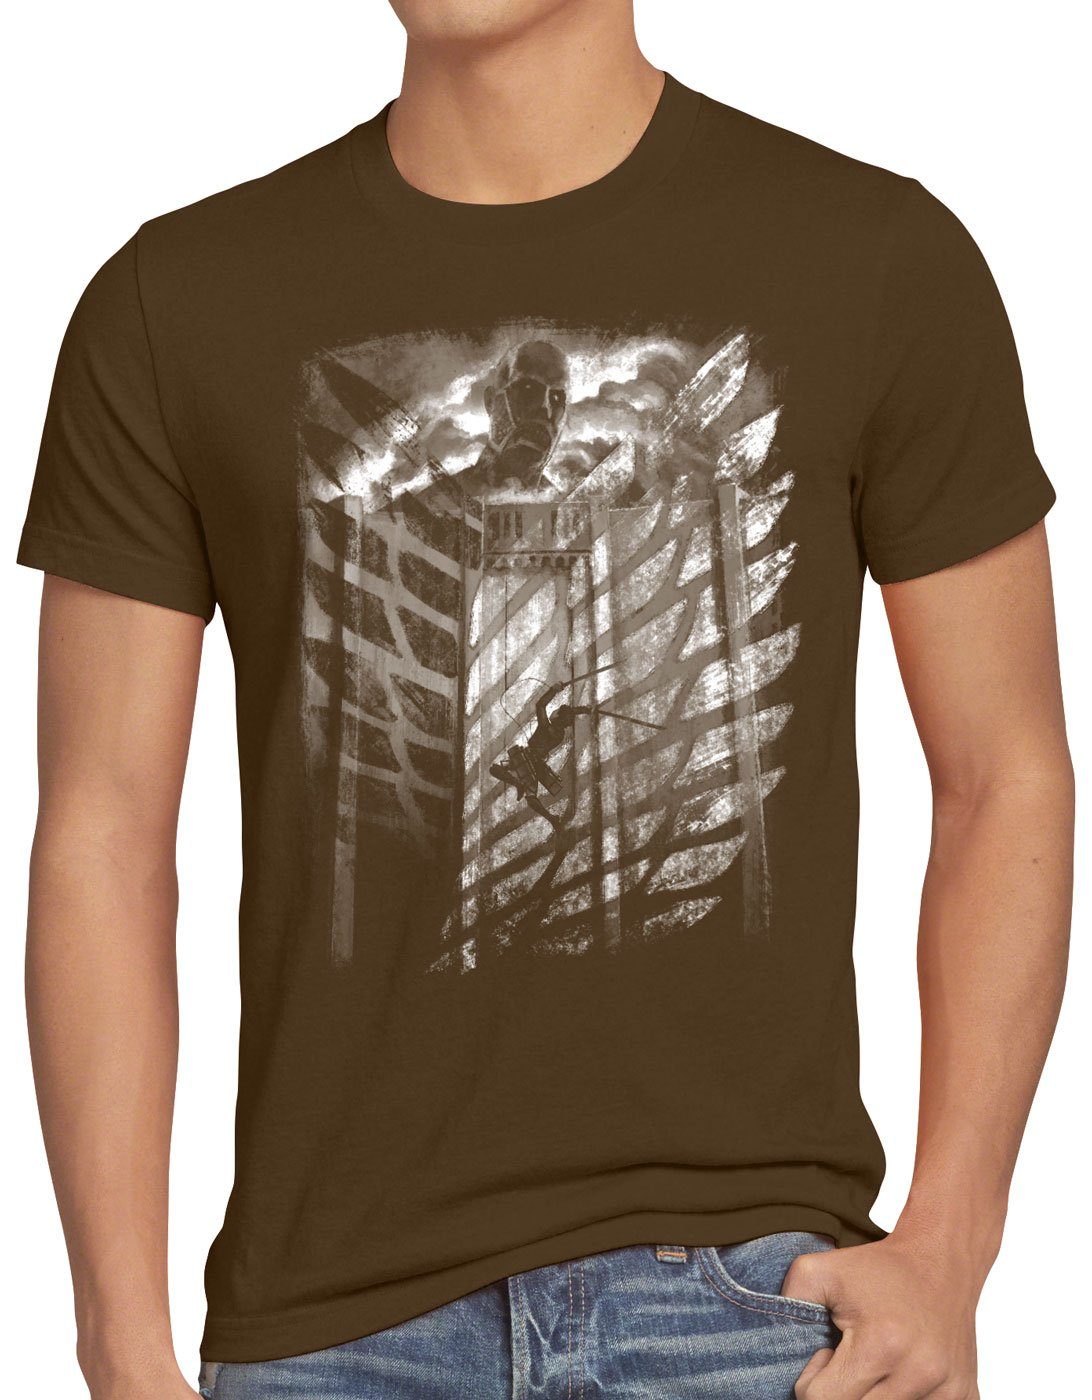 style3 Print-Shirt Herren T-Shirt CottoCloud AoT on Jaeger Flying braun Titan Attack